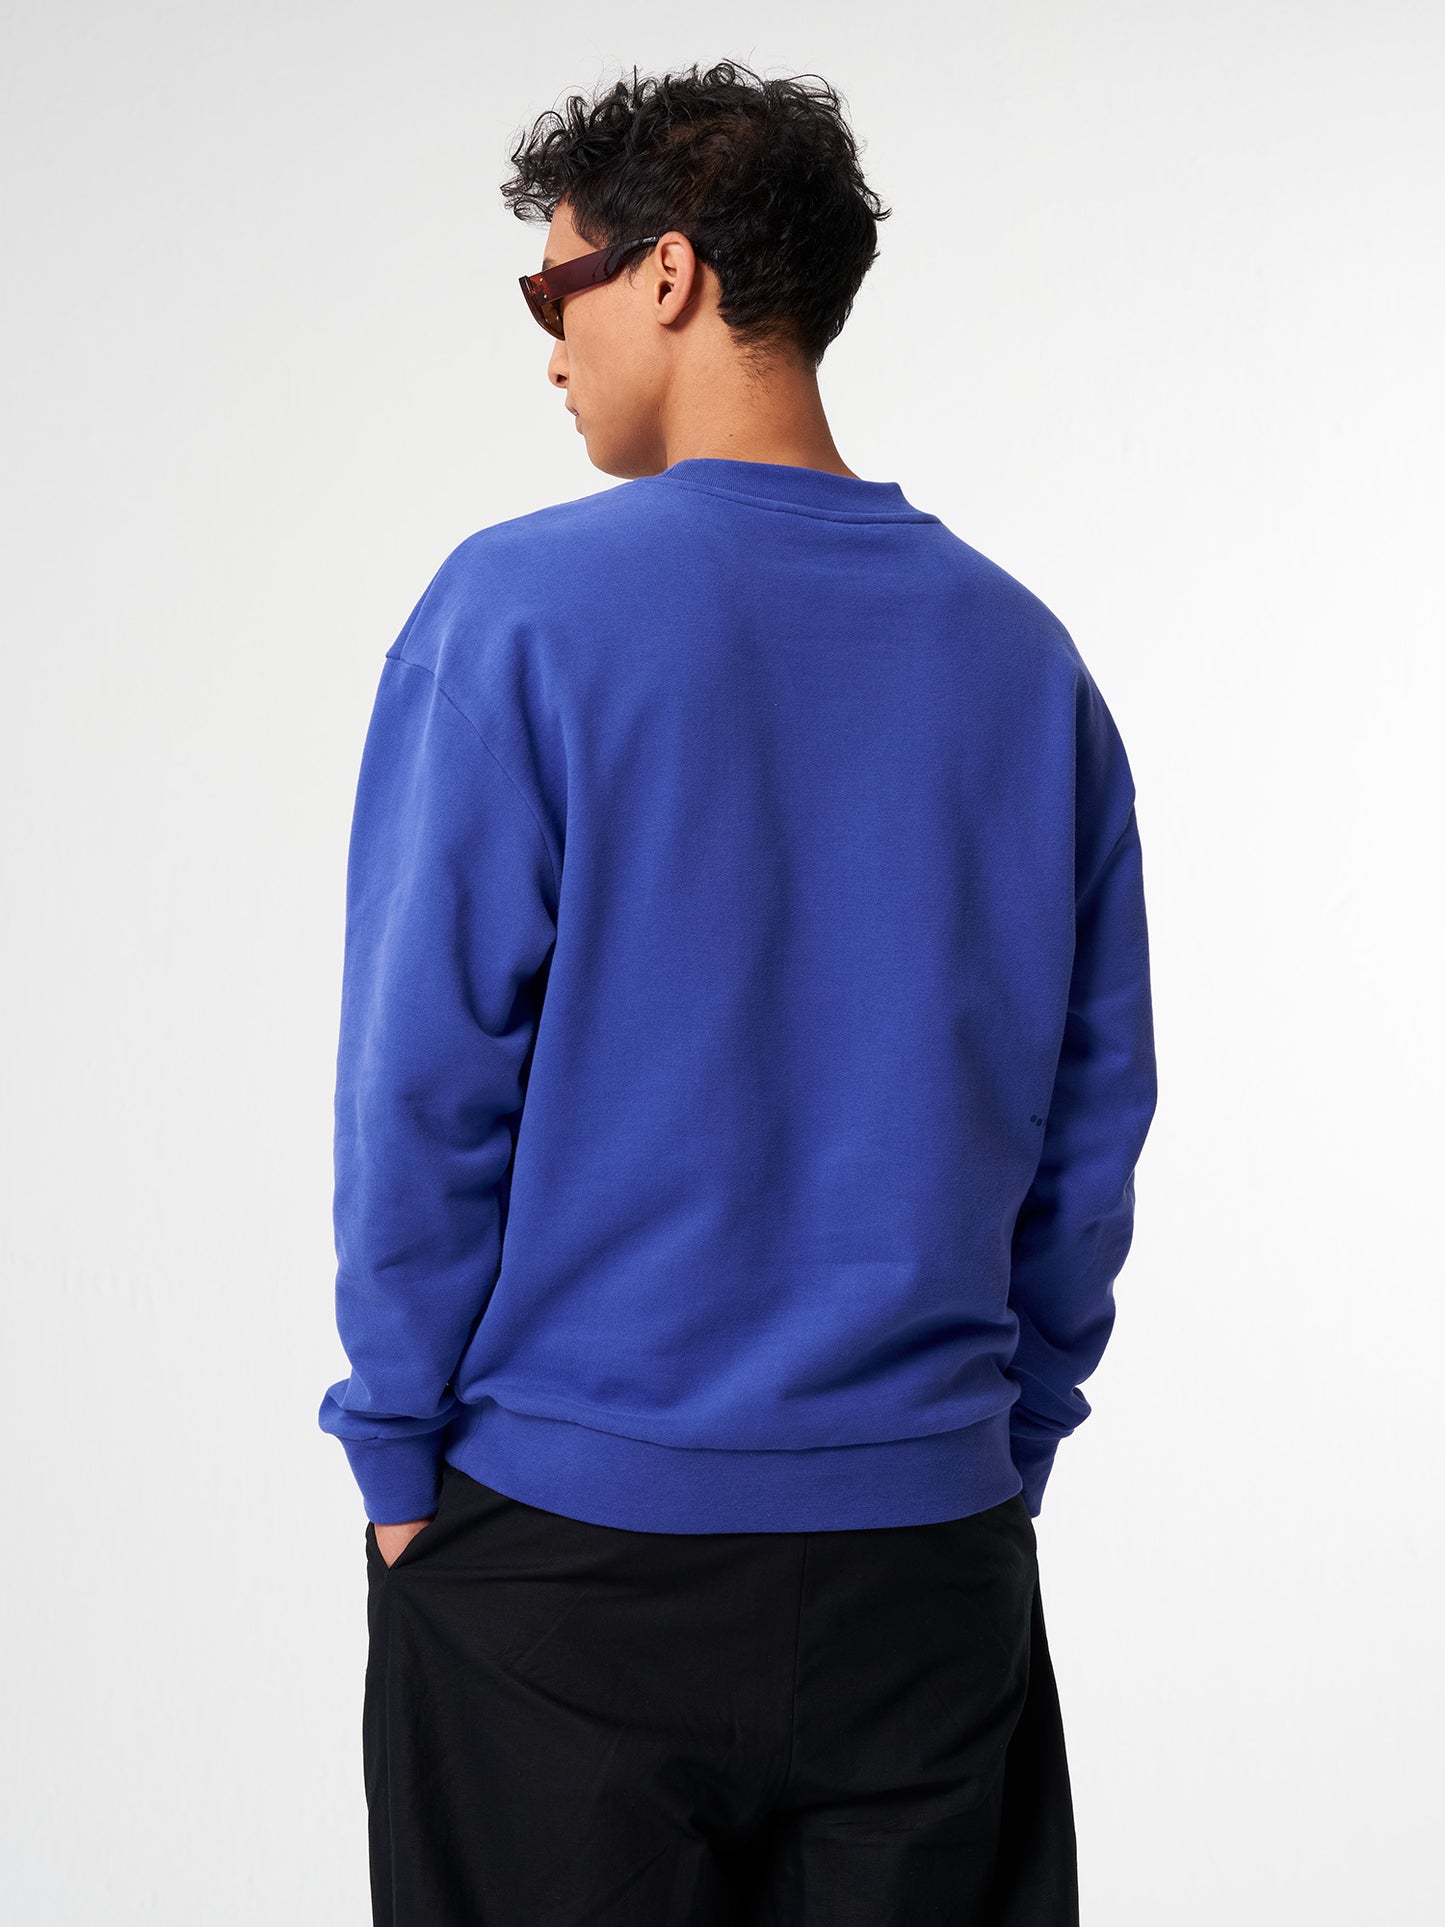 pinqponq-Sweatshirt-Unisex-Poppy-Blue-model-back